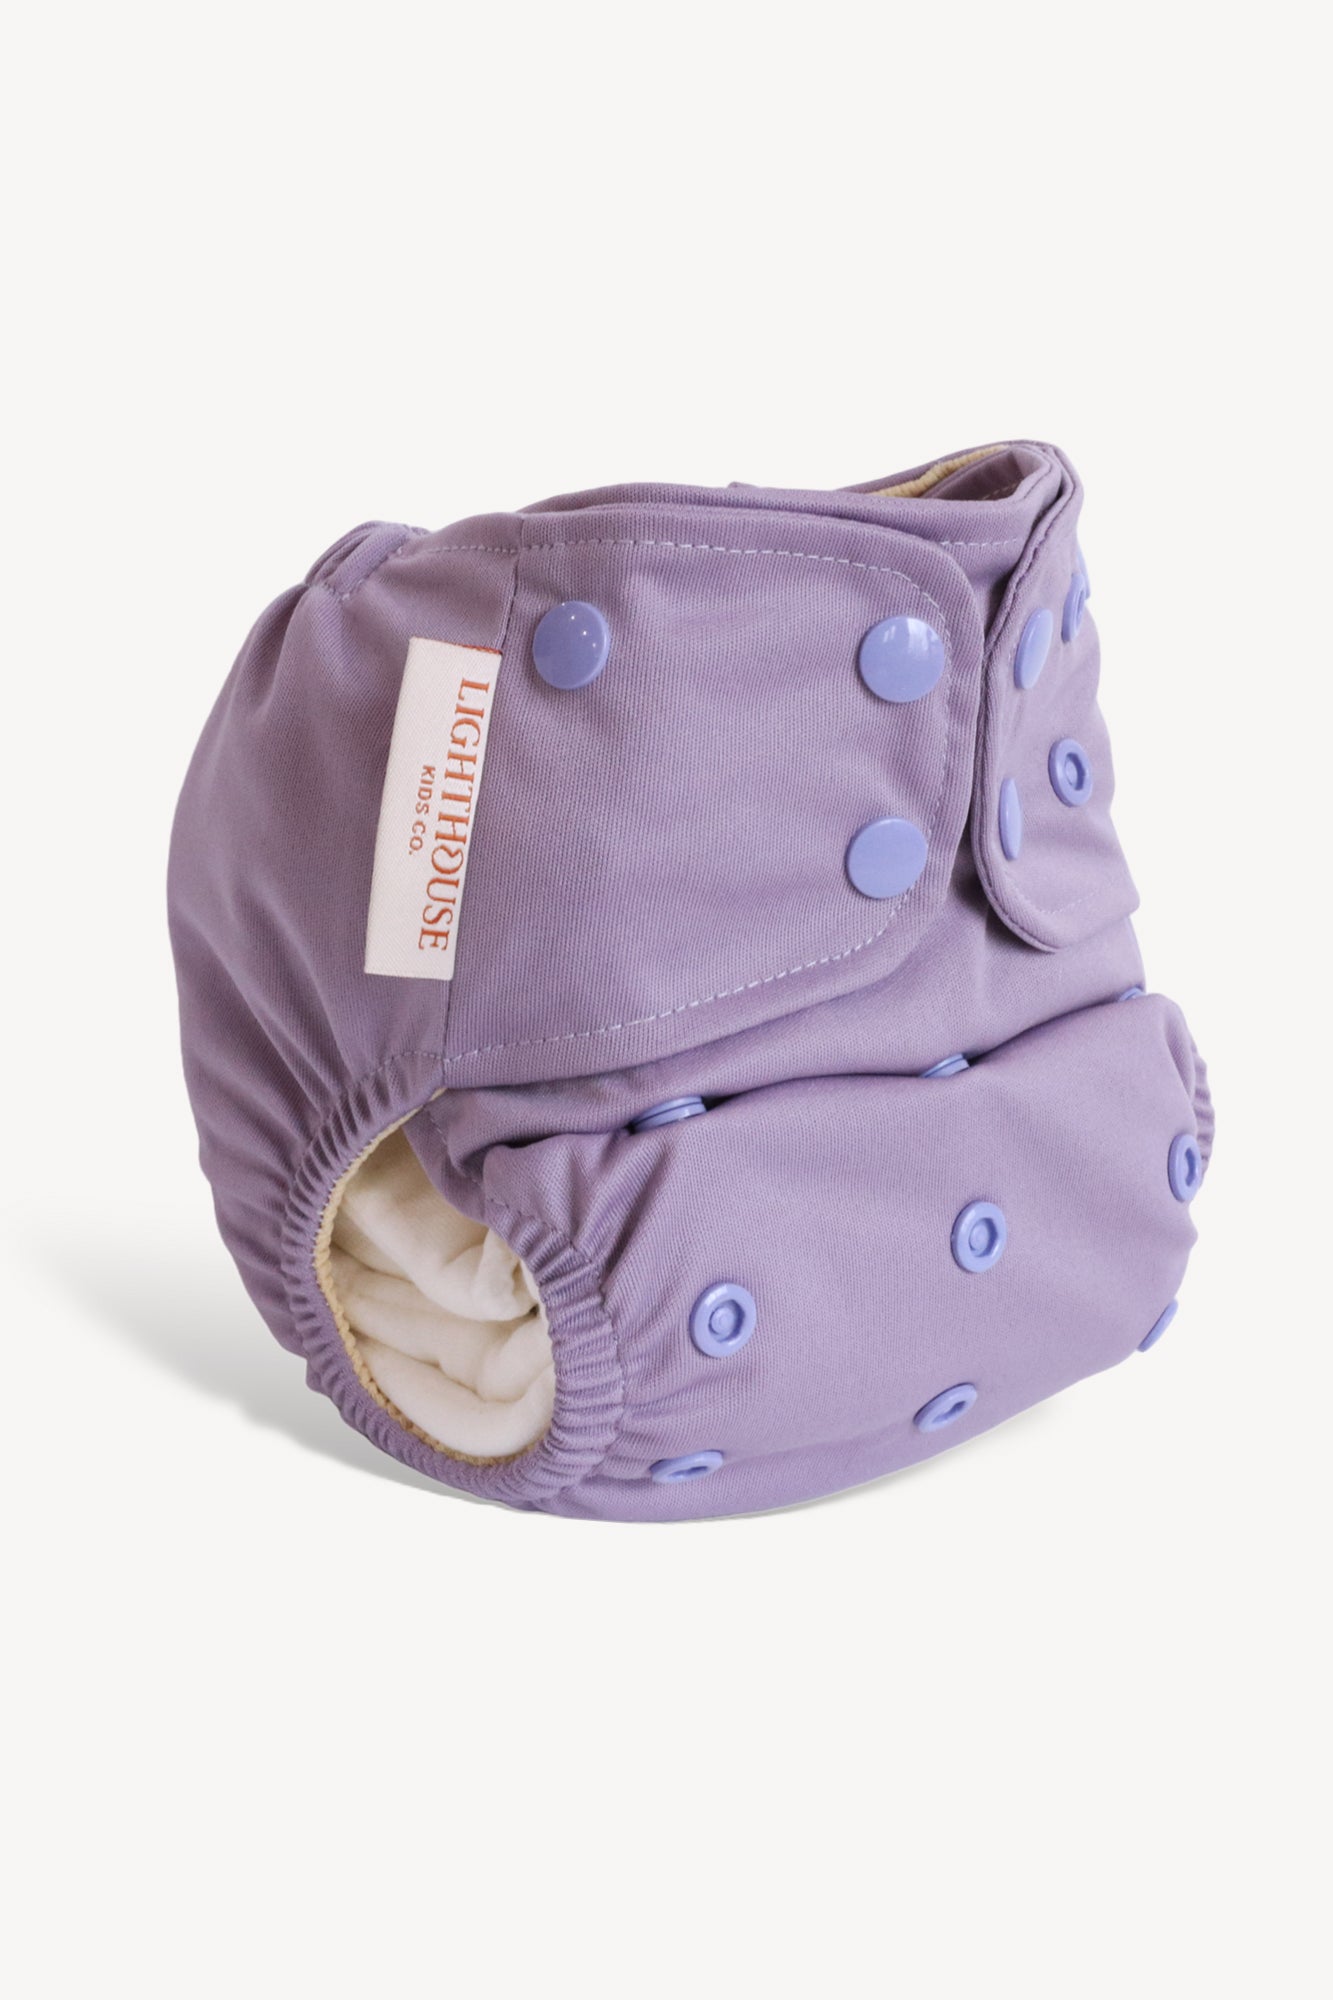 Easy-Stuff Pocket Cloth Diaper - Lilac